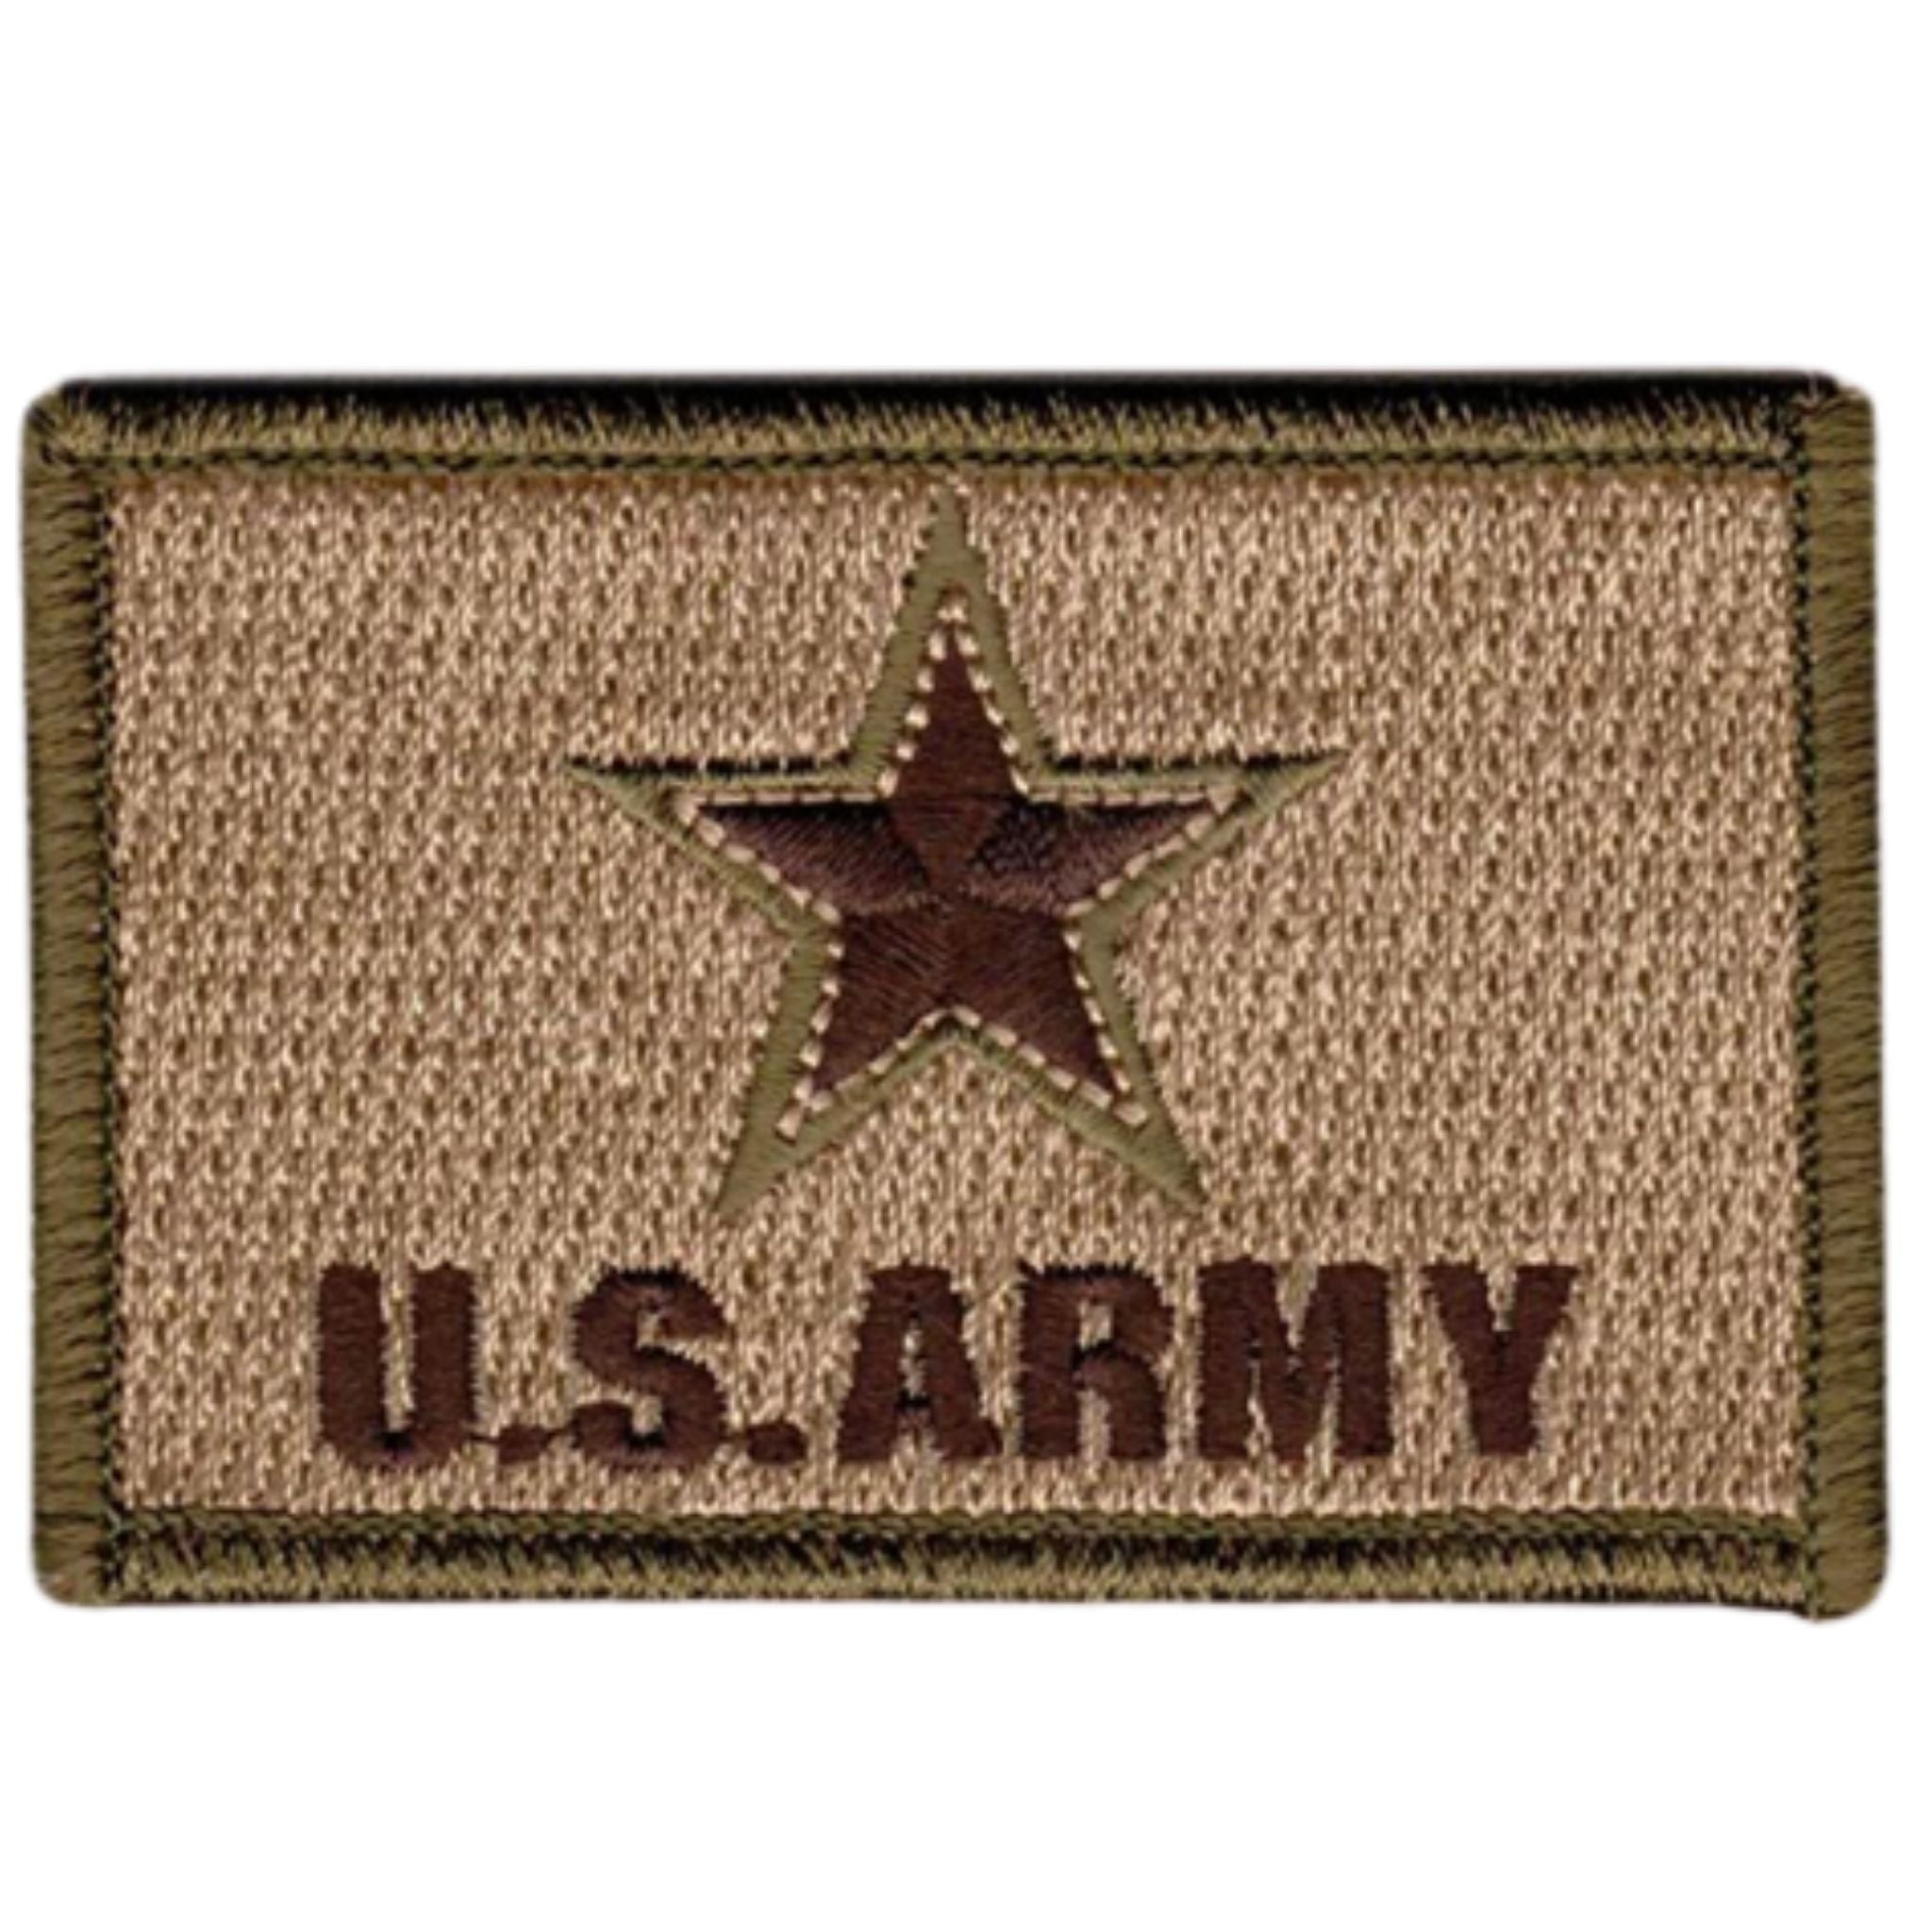 US Army Star Patch